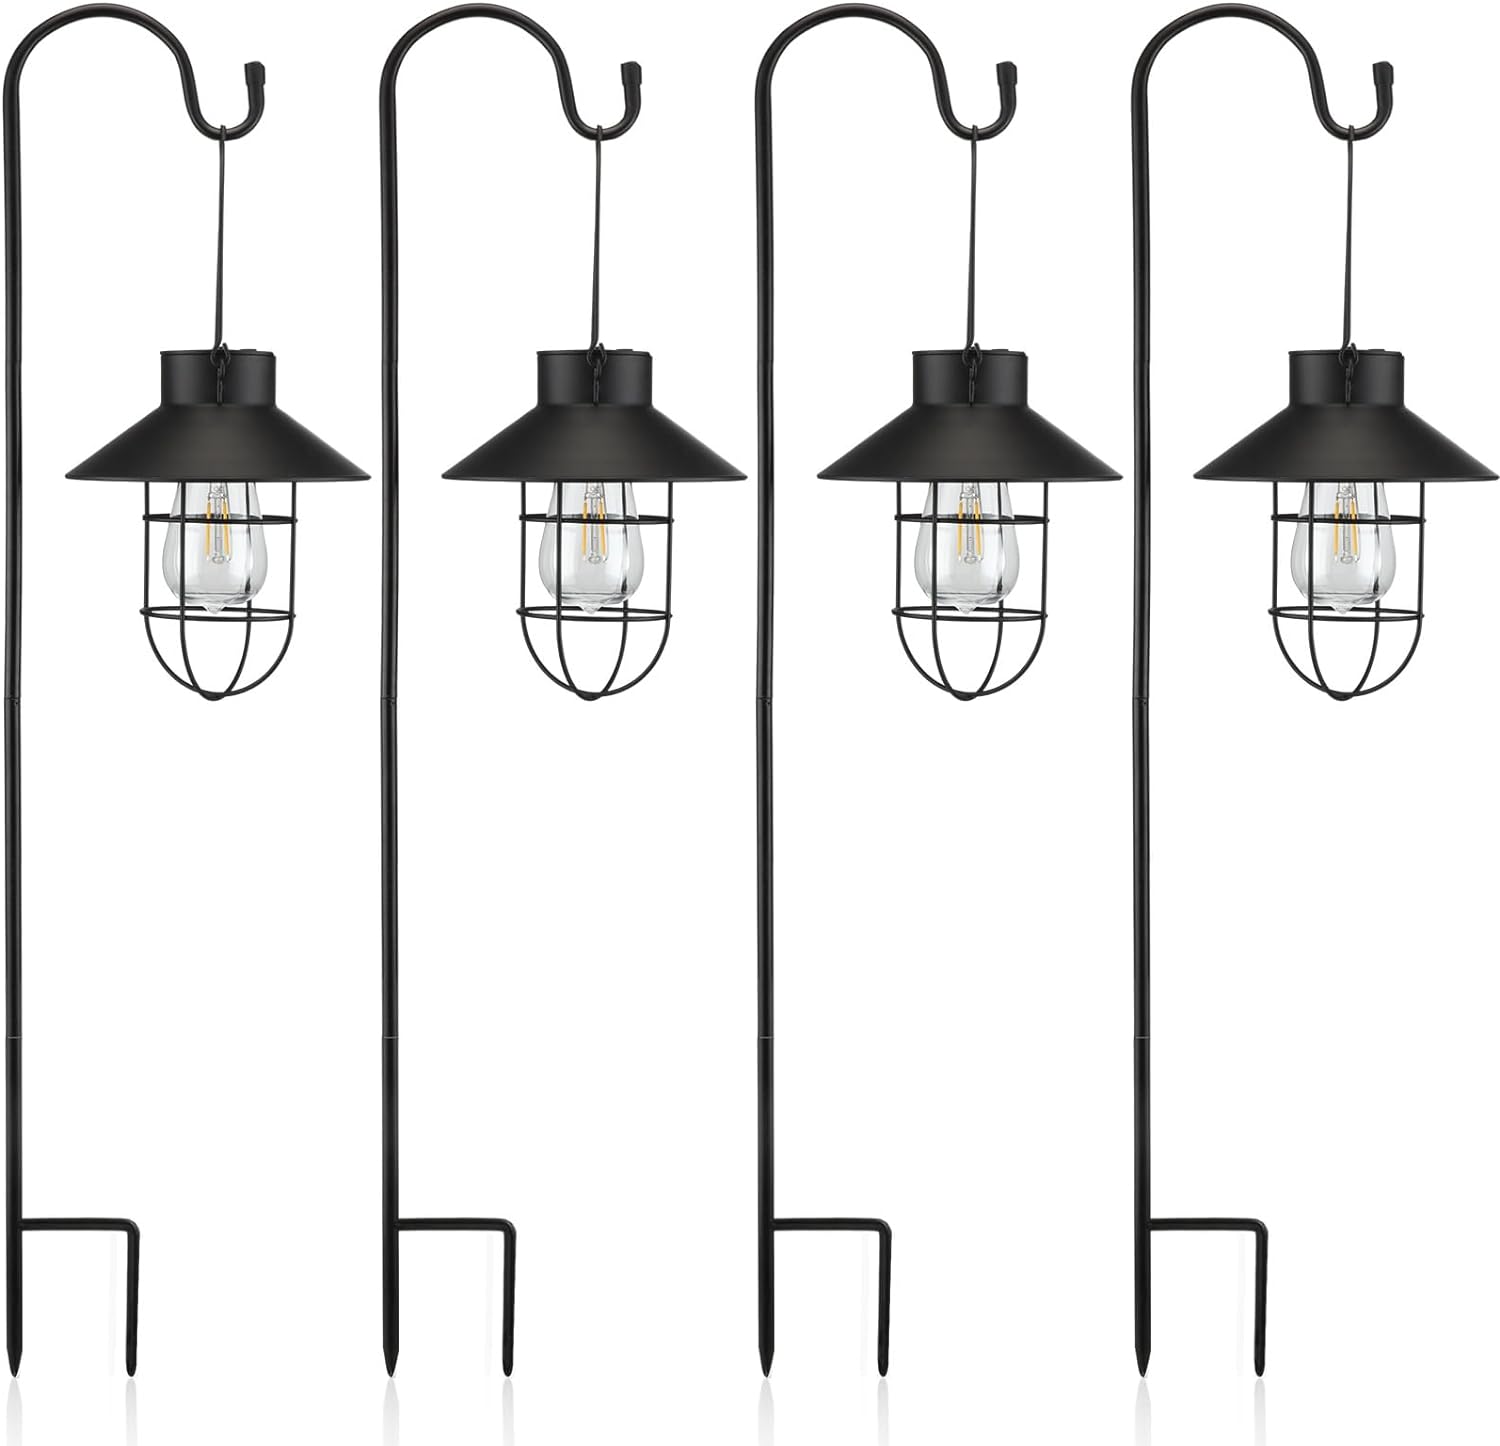 4 pcs hanging solar light 31 outdoor solar lamp lanterns with dual use shepherd hook waterproof pathway hanging lights m